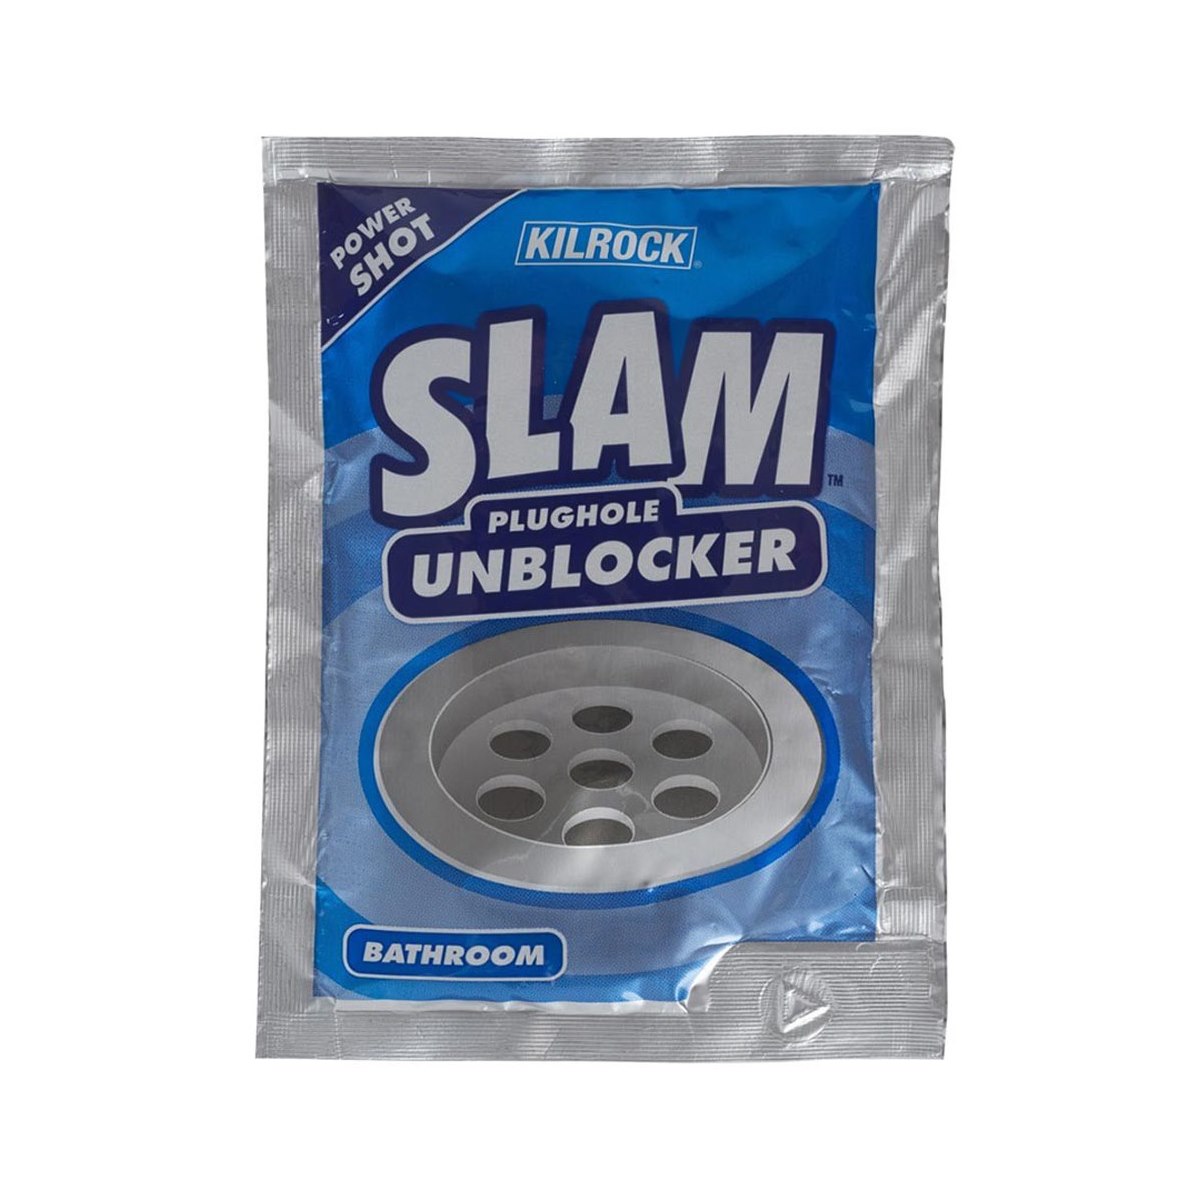 Kilrock Slam Plughole Unblocker Bathroom 80g